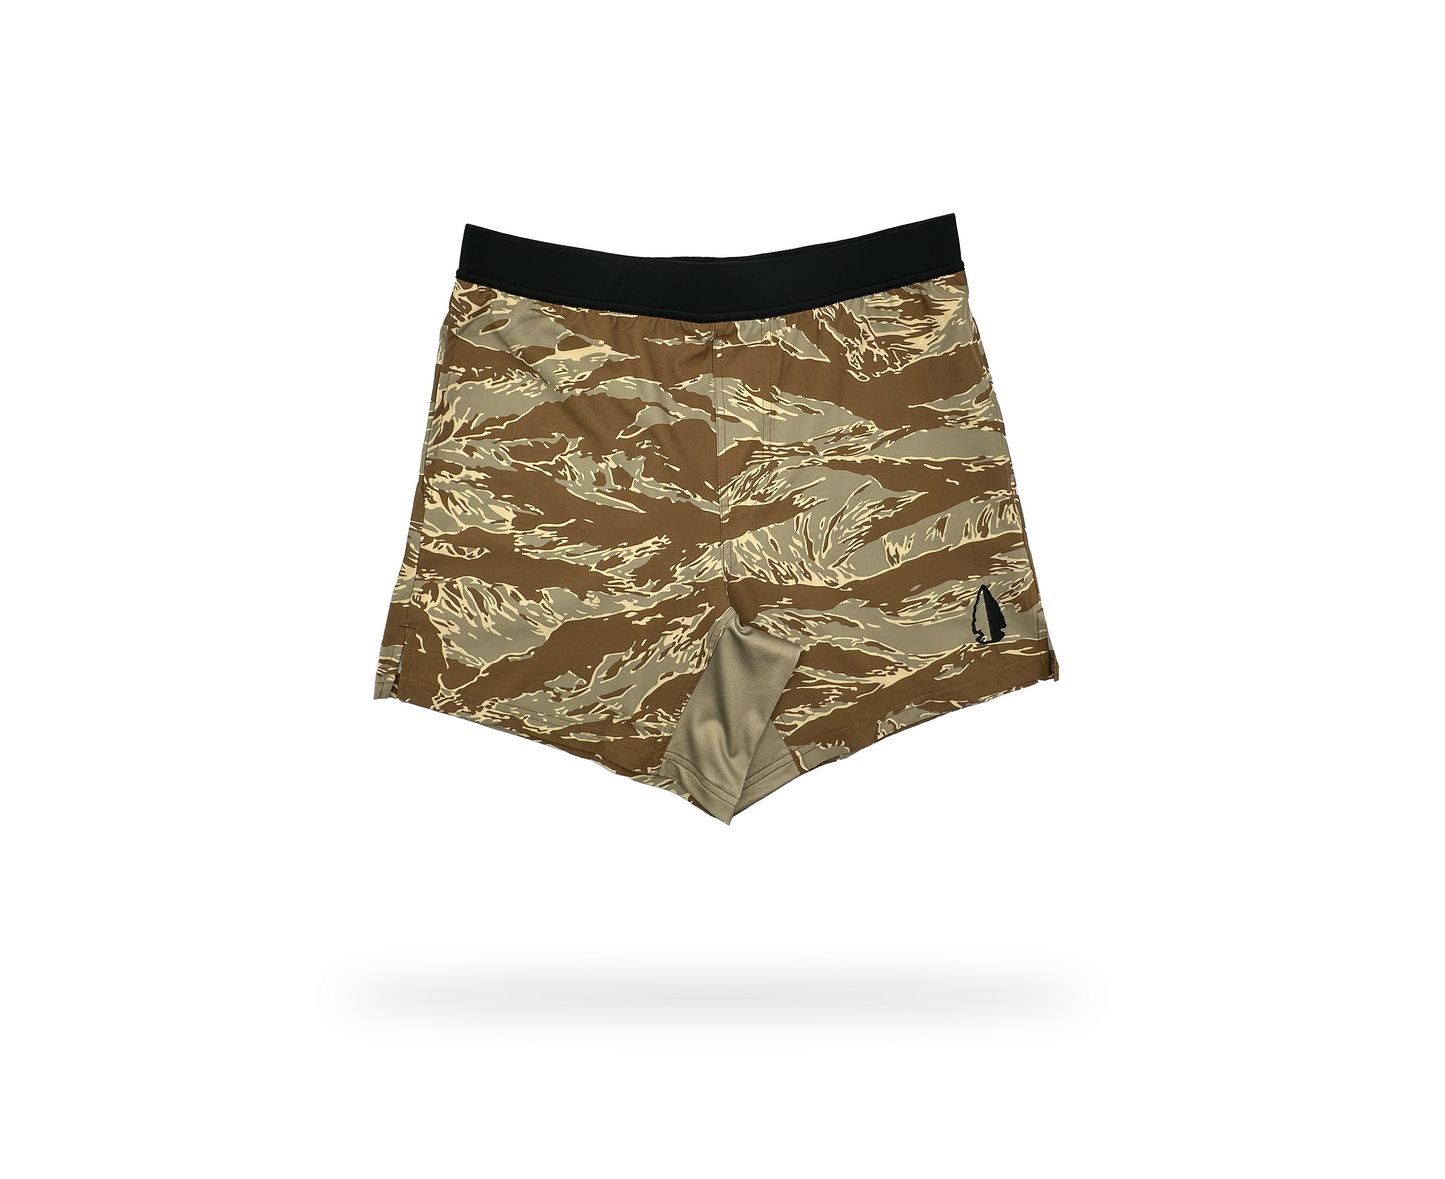 THF Athletic Shorts - Desert Tiger